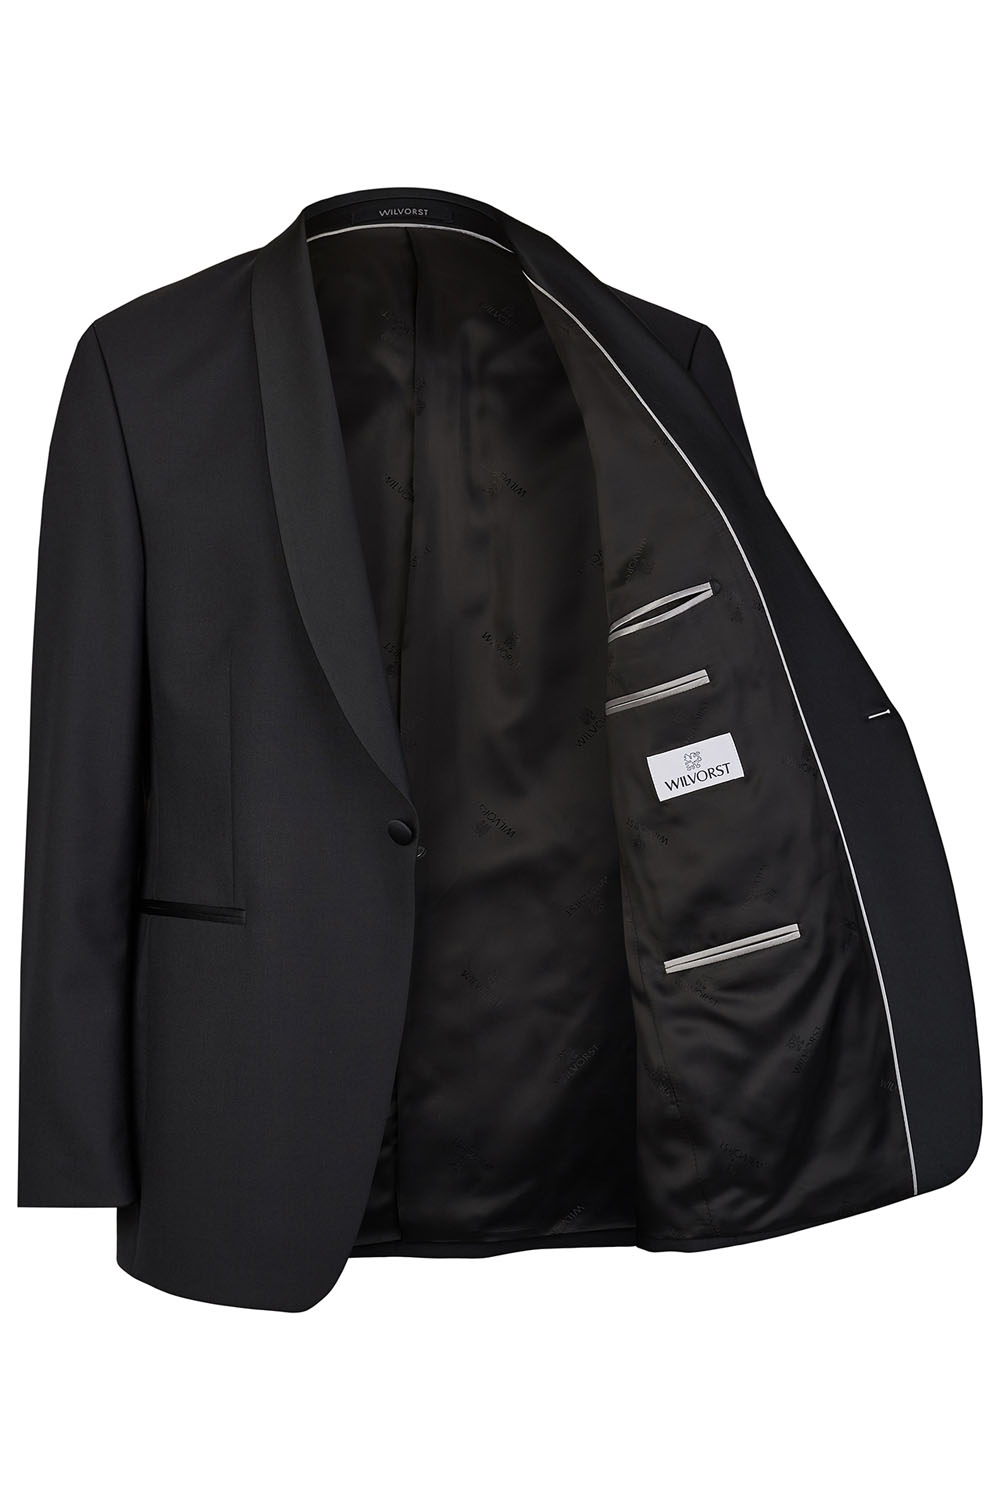 Black Smoking Slim line Tuxedo - Tom Murphy's Formal and Menswear